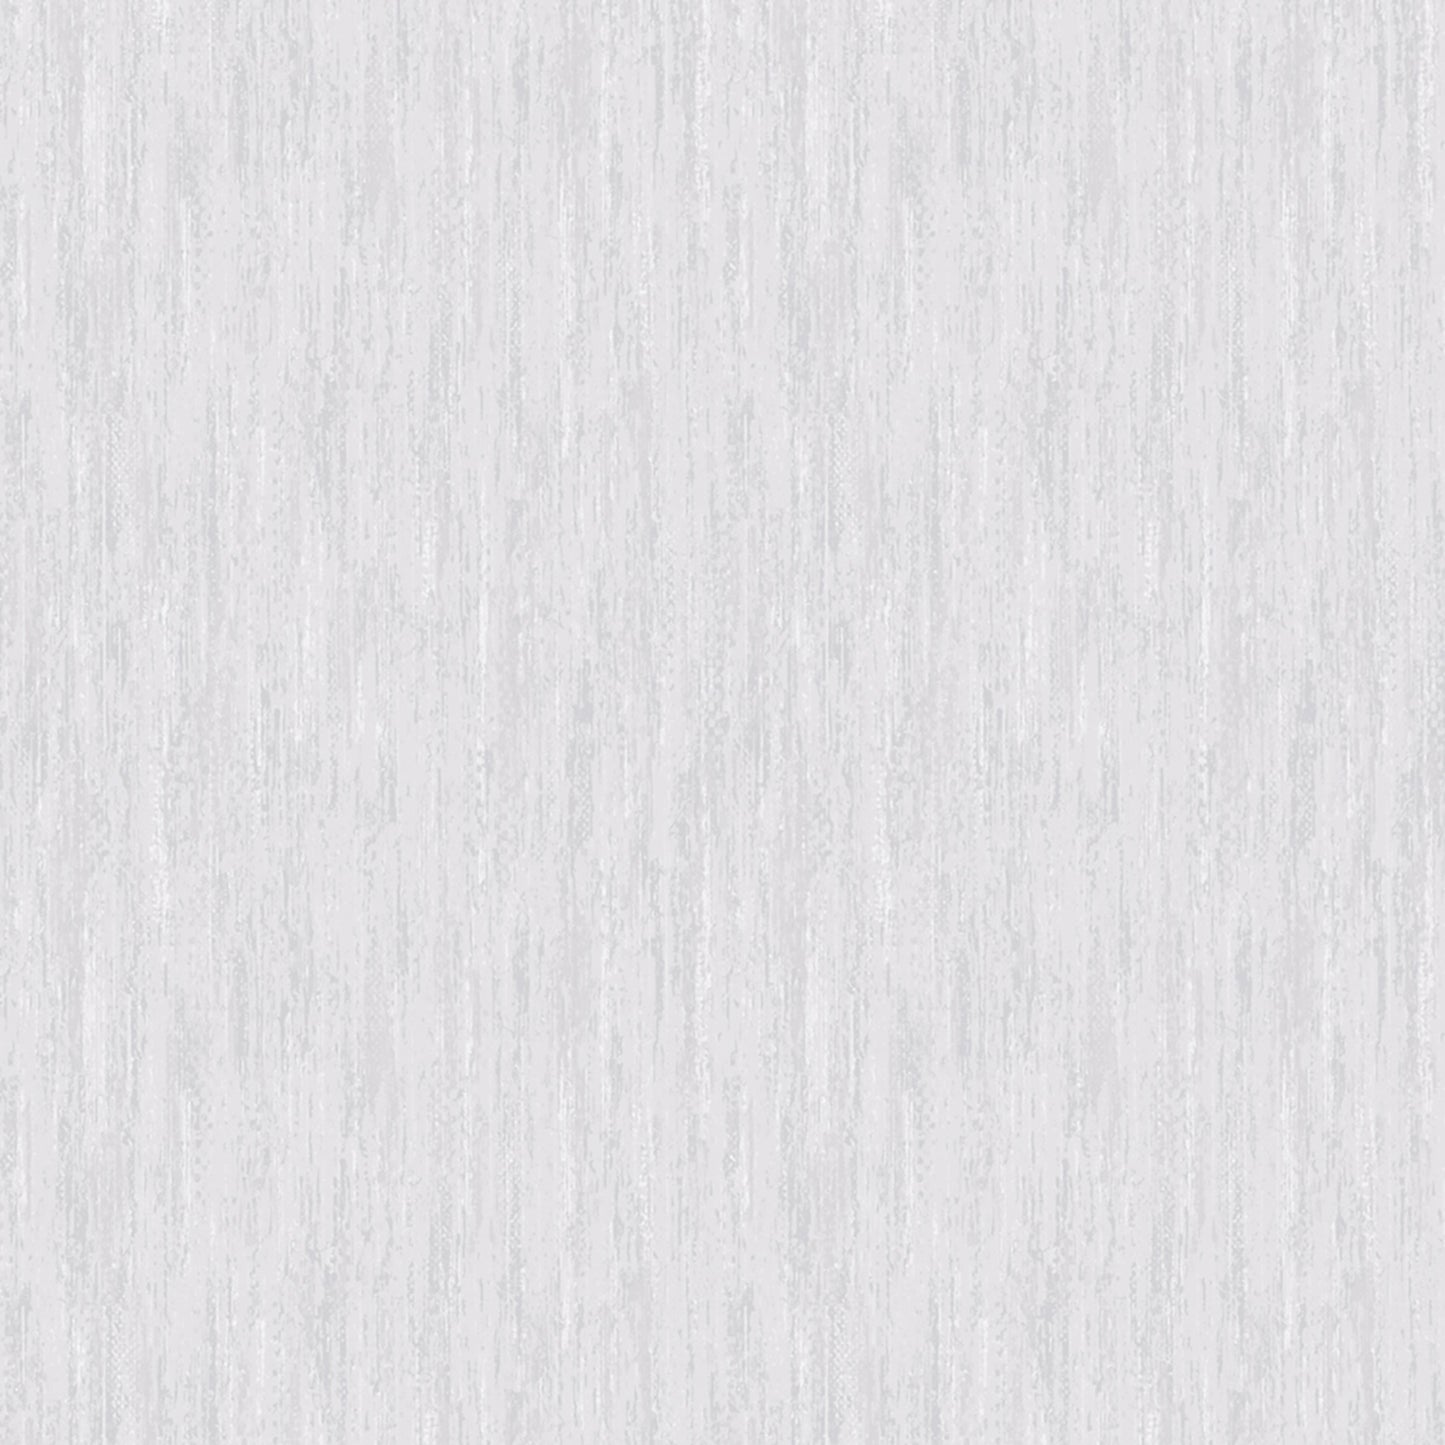 Save 2836-M0735 Shades of Grey Greys Texture Pattern Wallpaper by Advantage